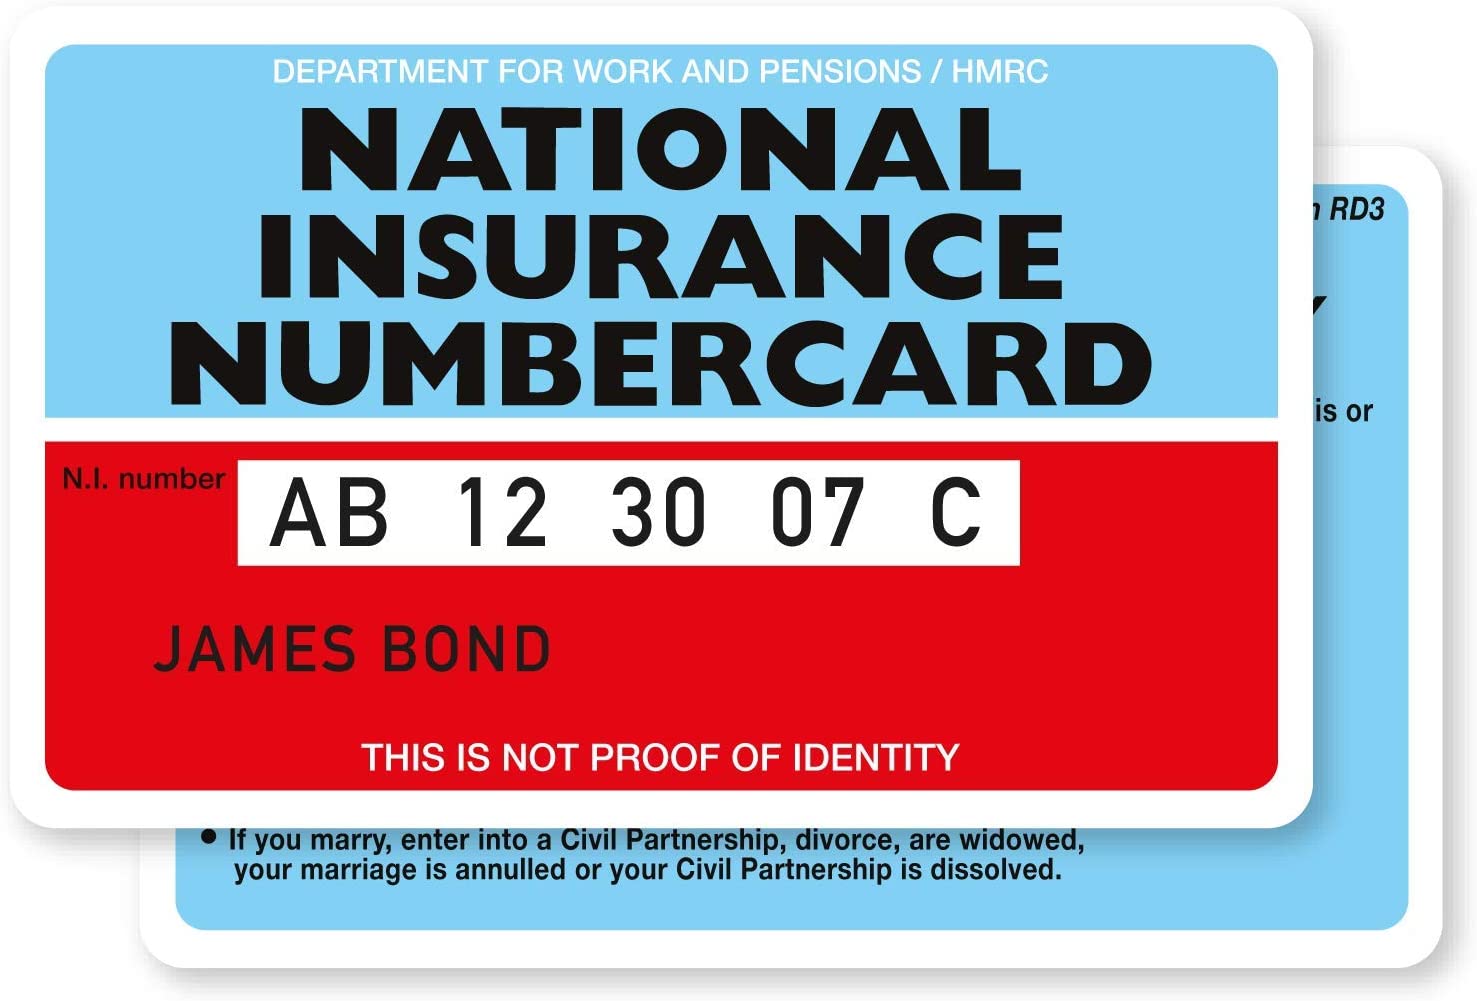 serial number on uk national insurance letter